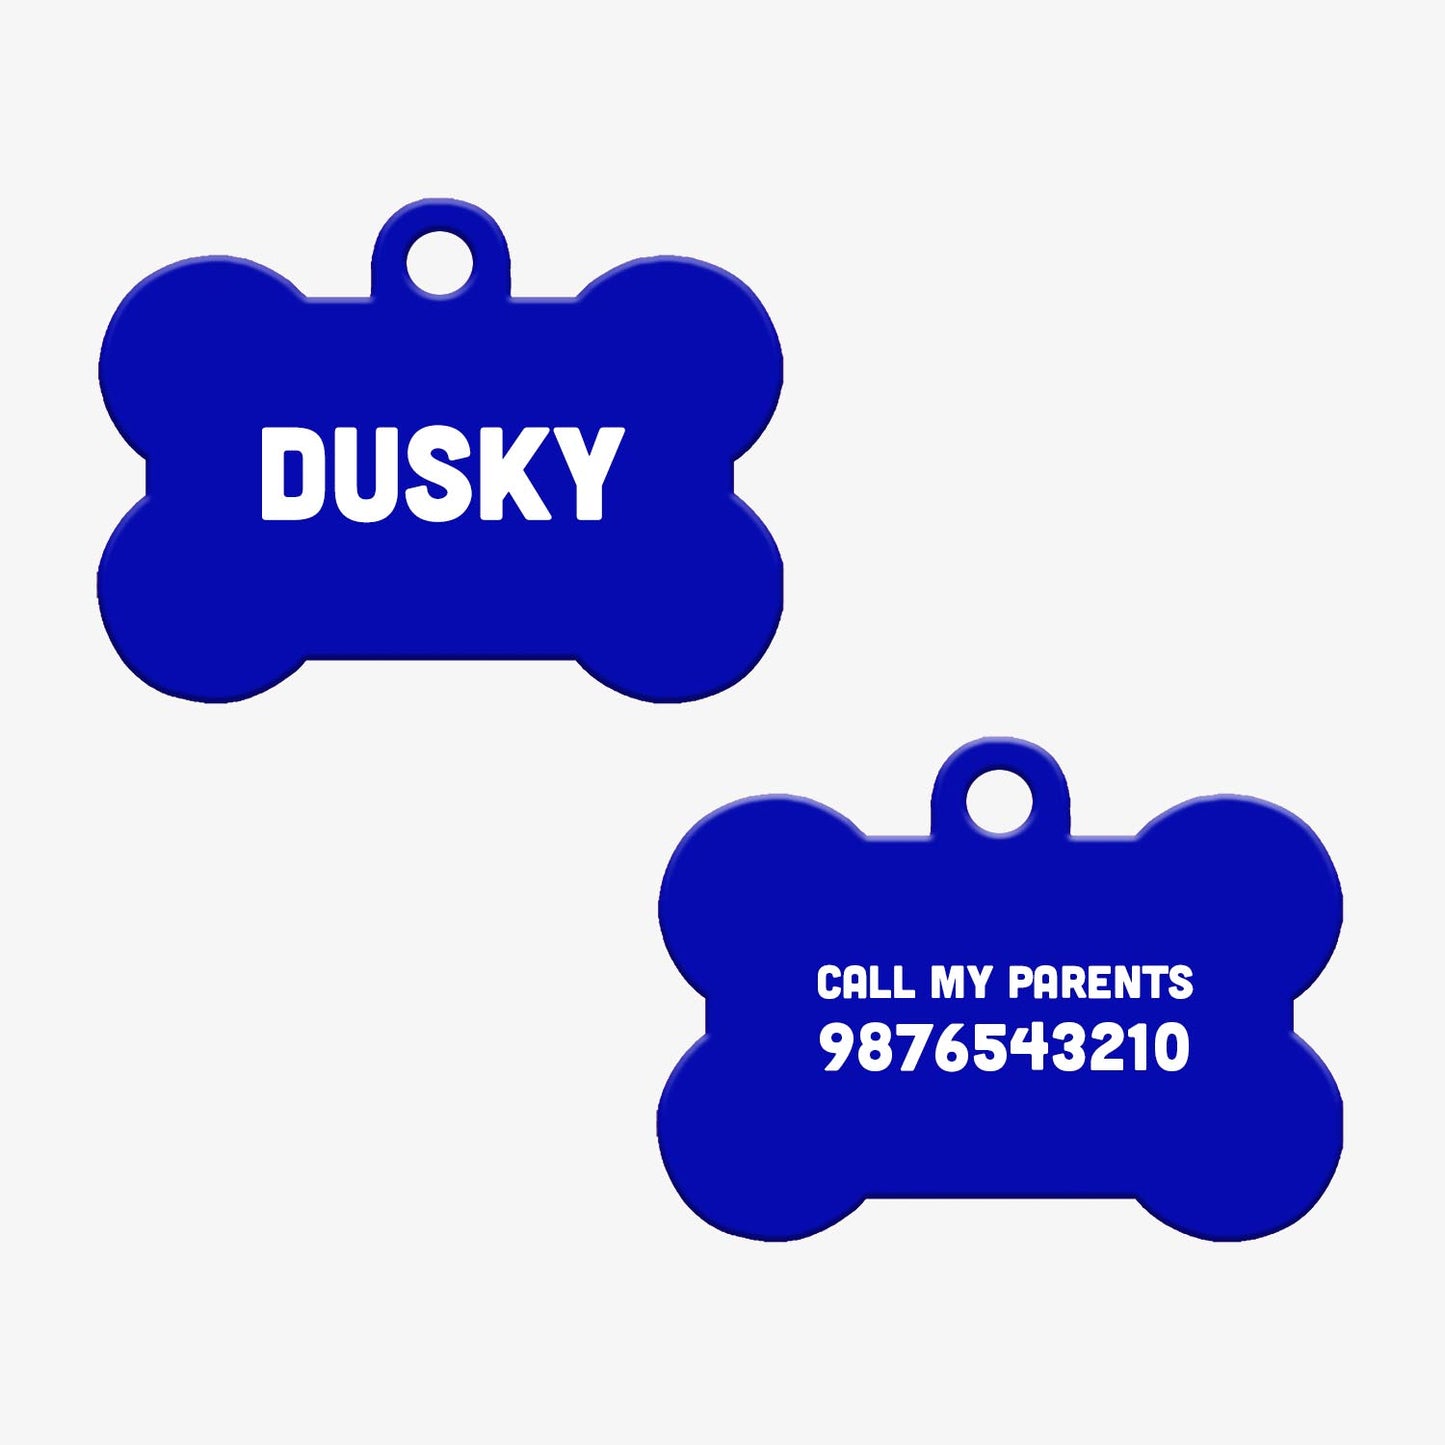 Personalized Metallic Pet ID Tag